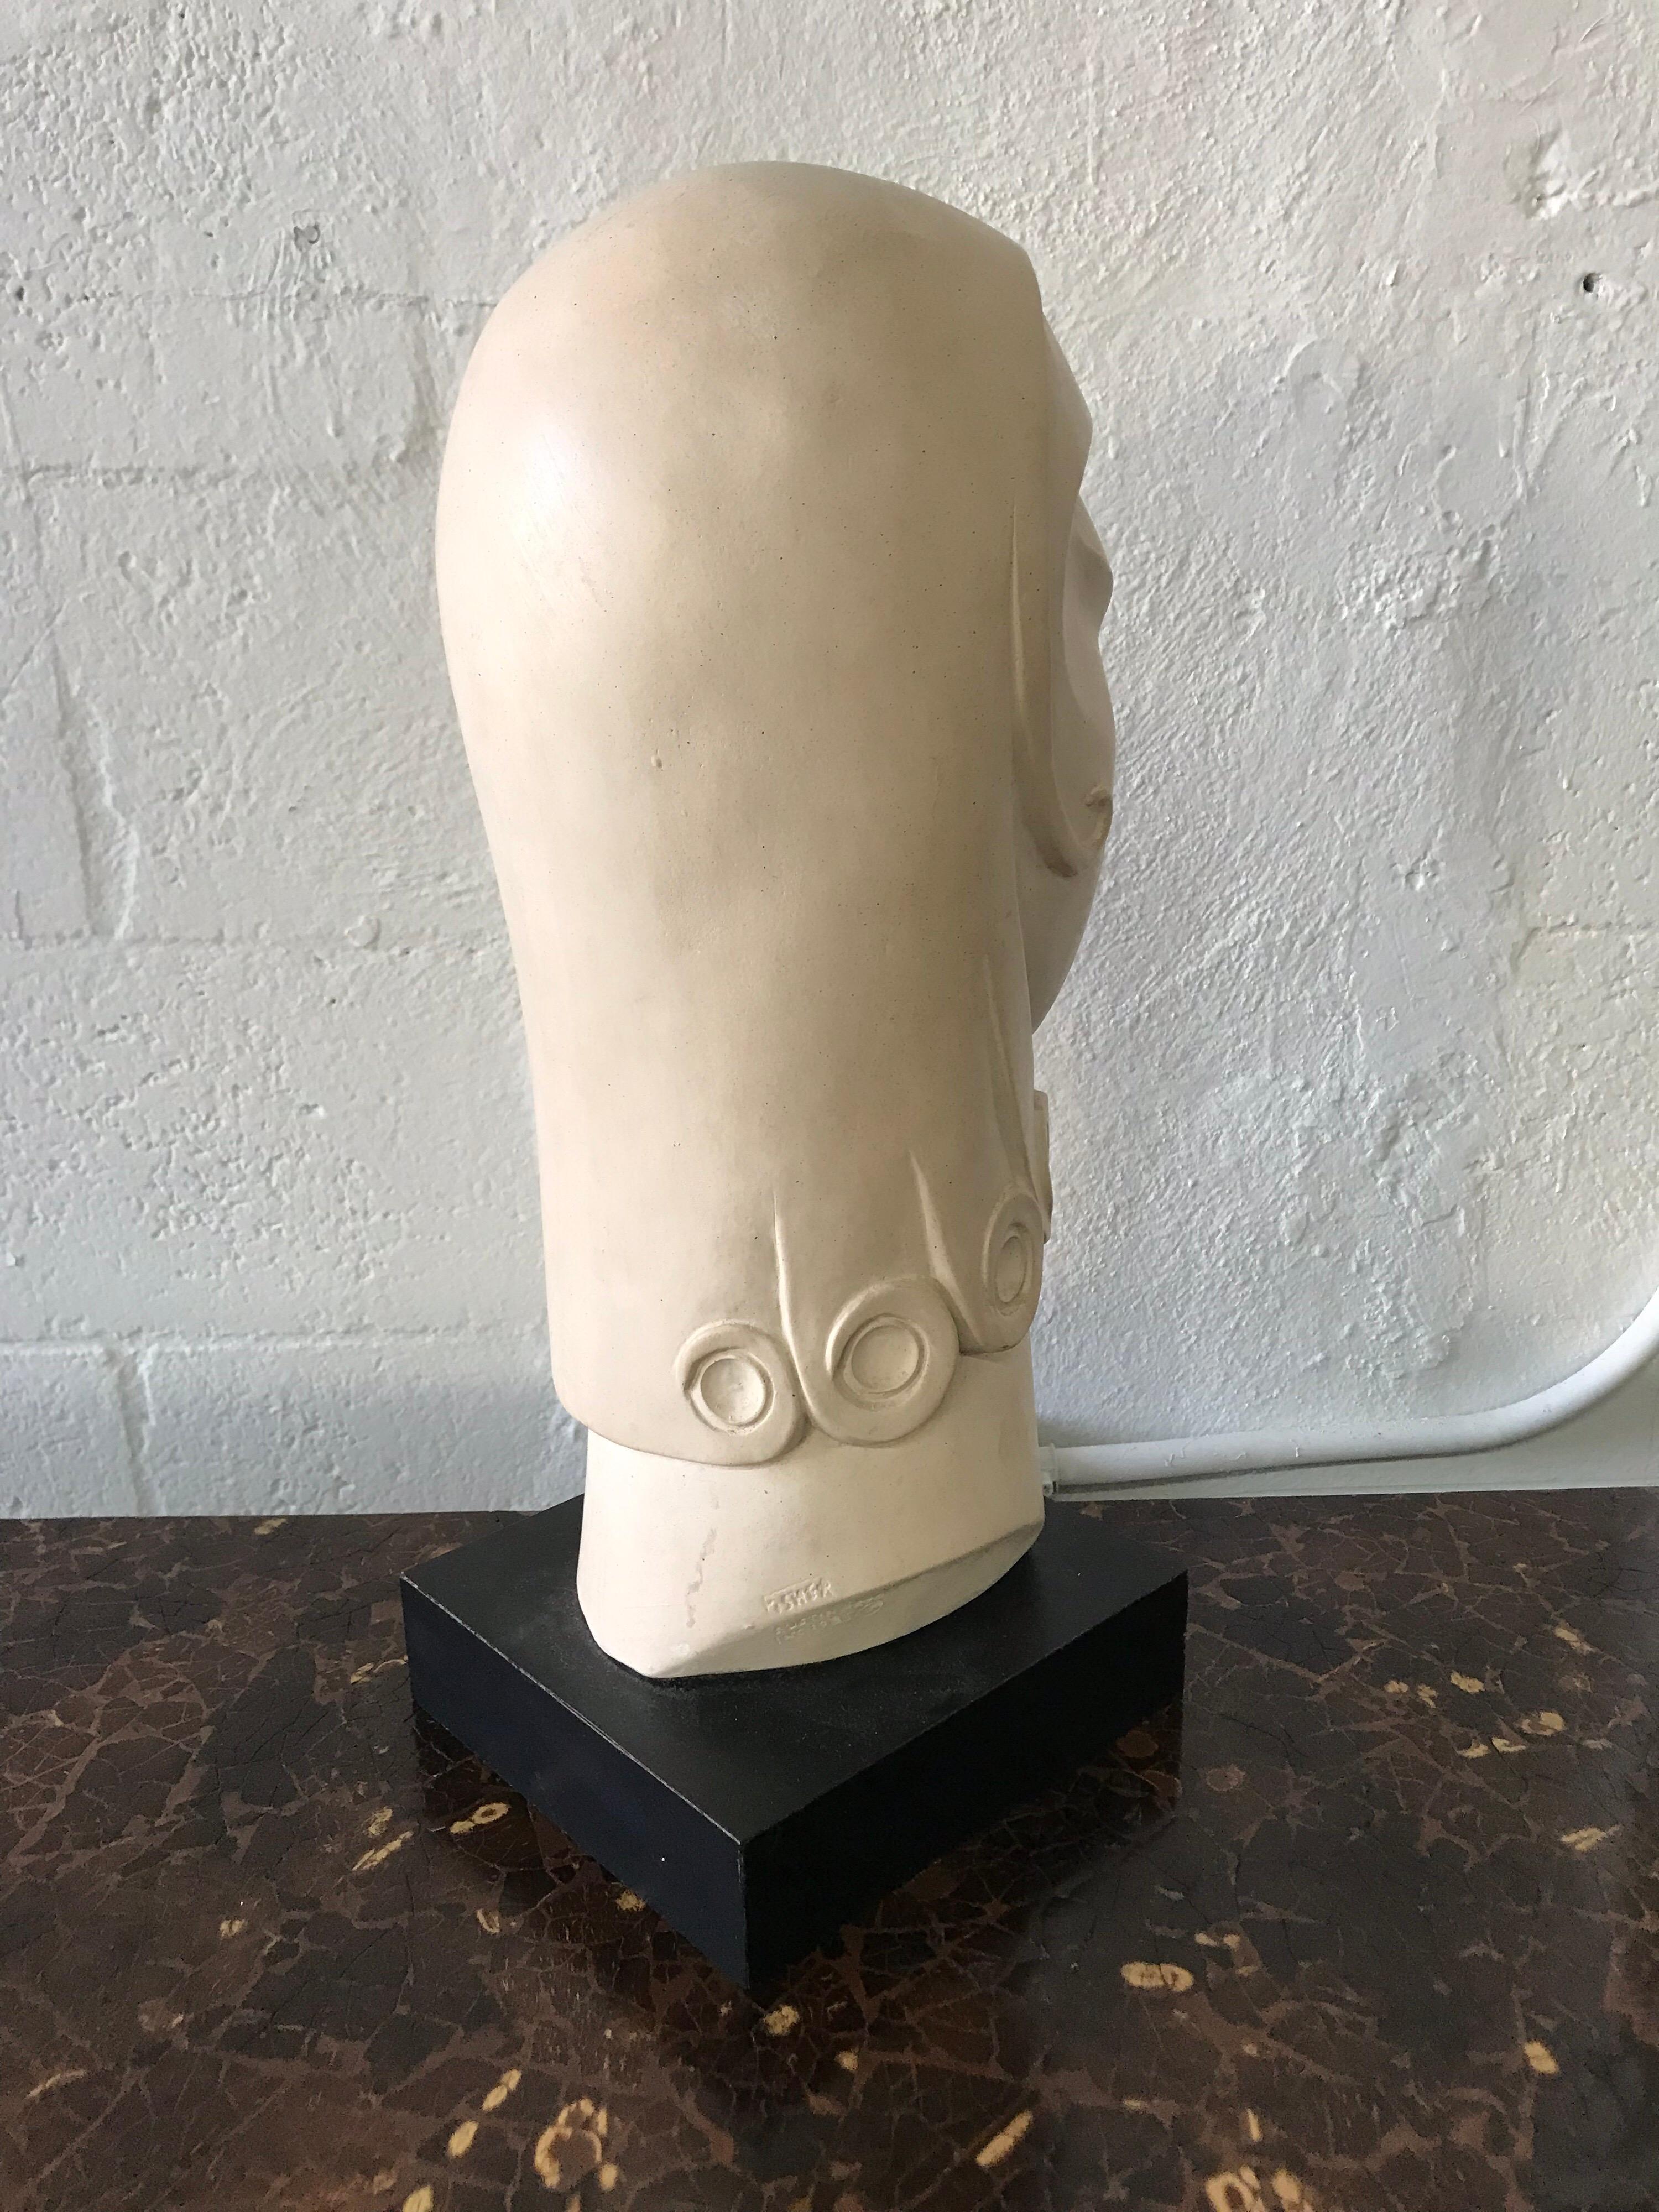 American Postmodern Brancusi Style French Art Deco Moderne Plaster Head Bust Sculpture